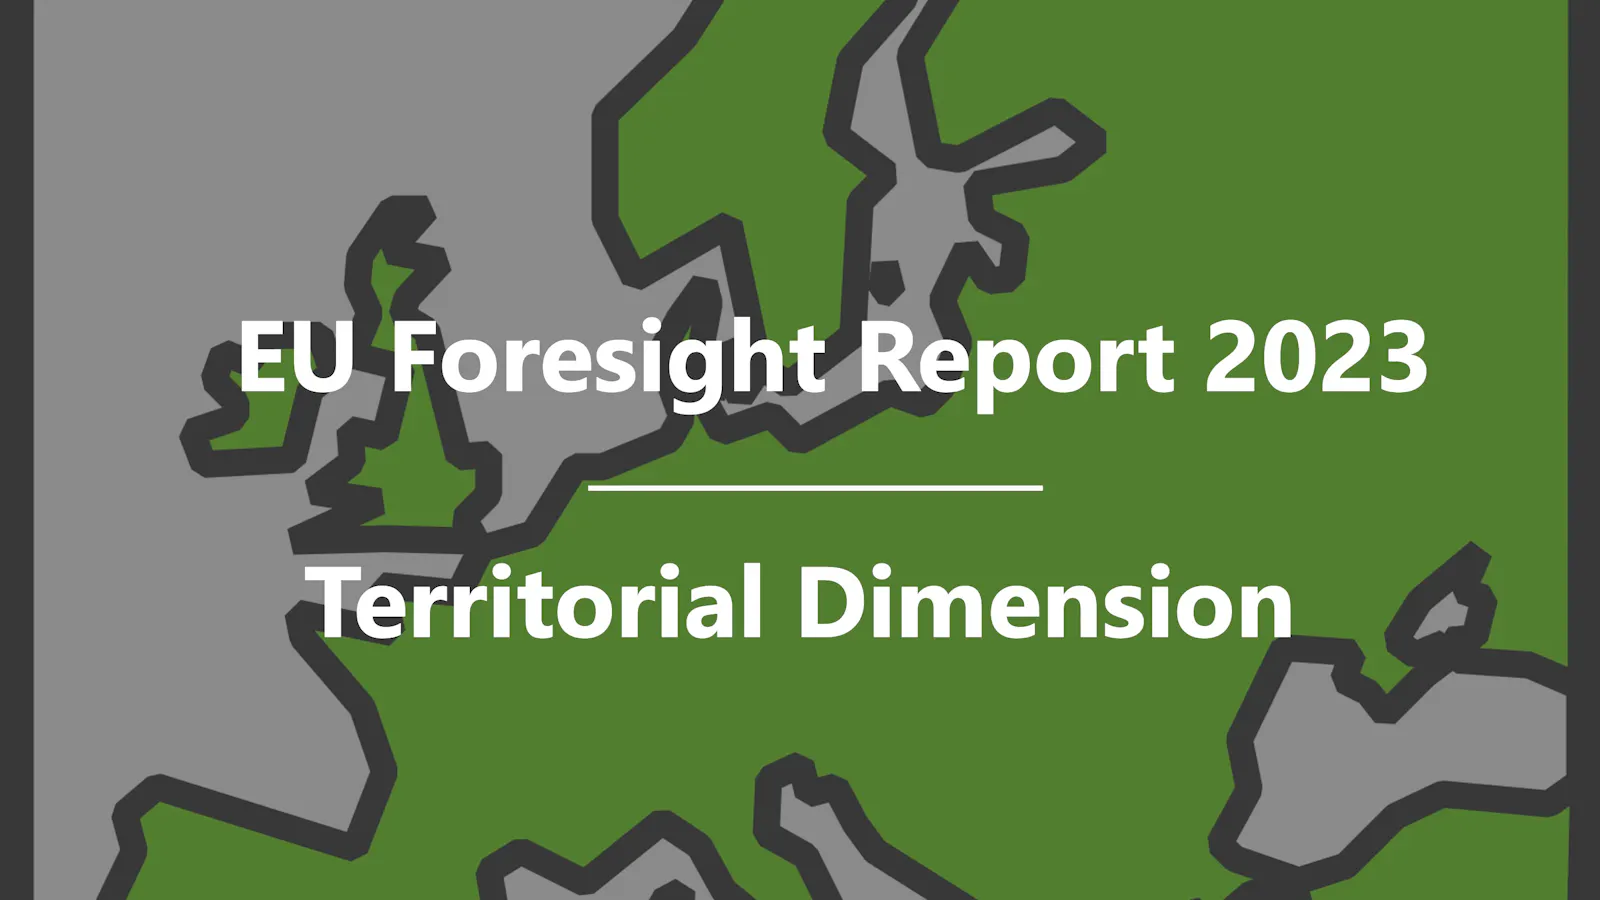 A territorial dimension of the EU Foresight Report 2023?